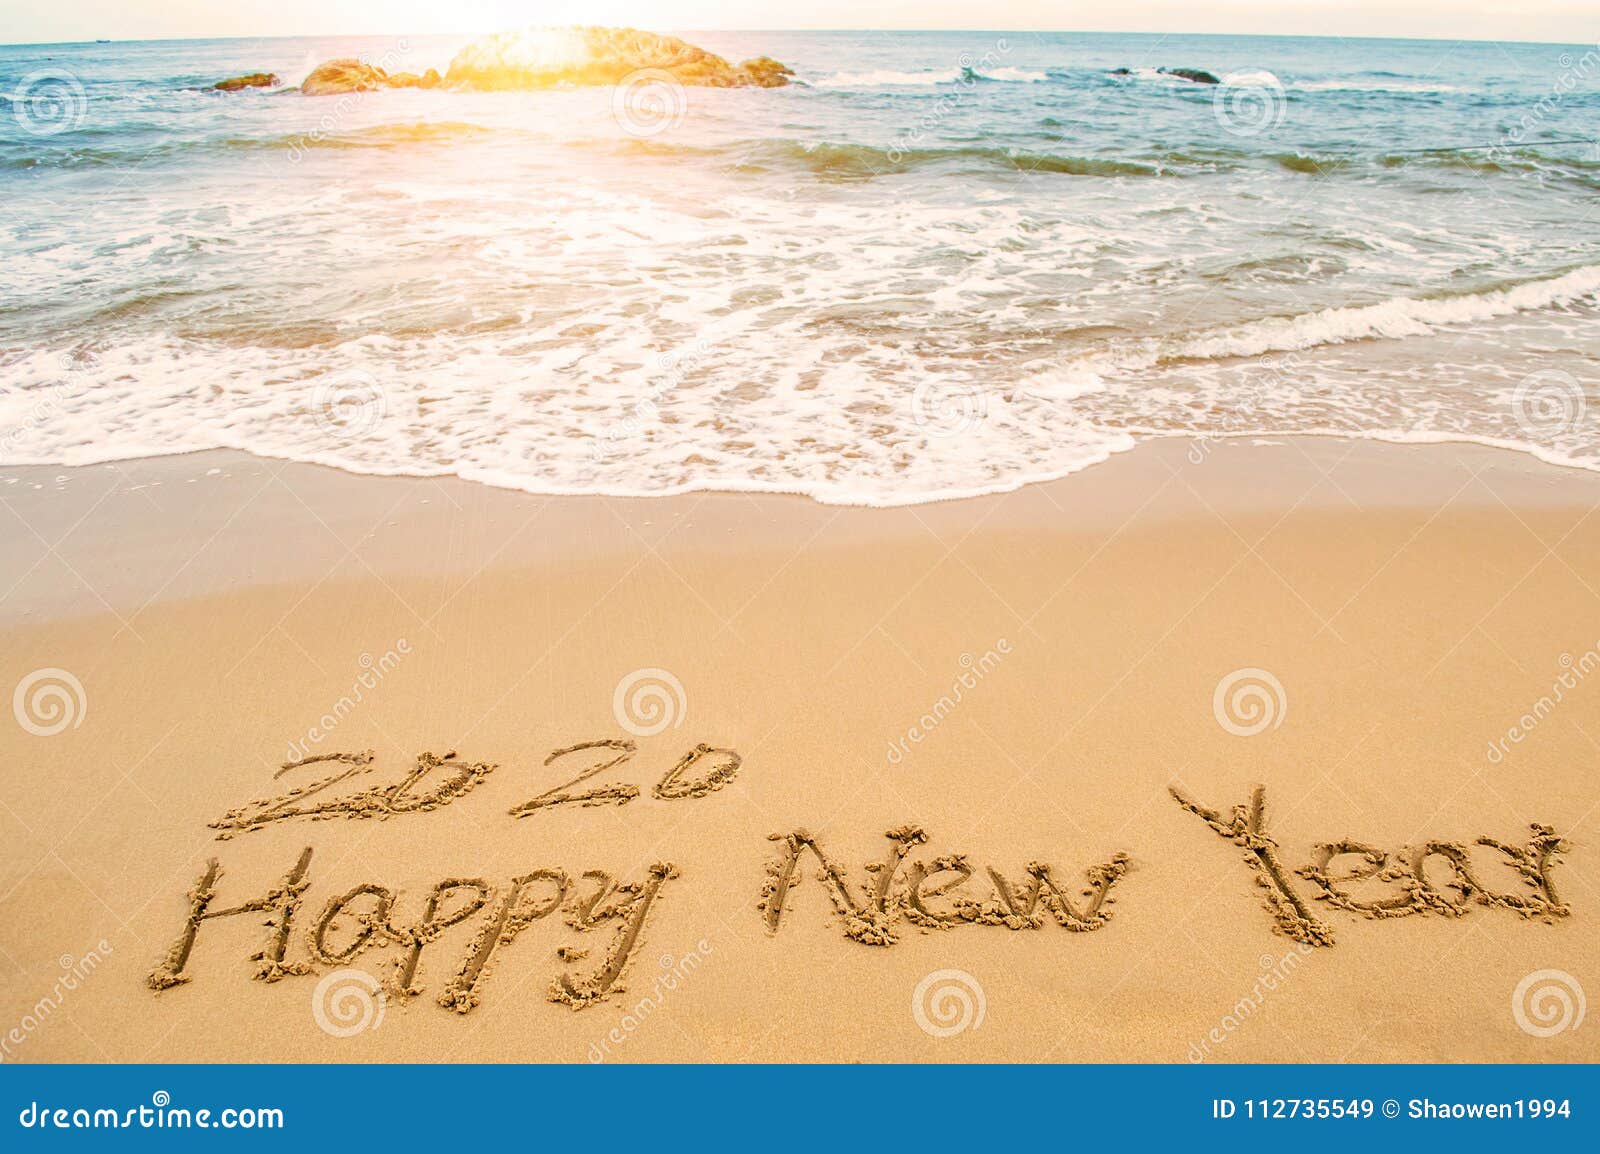 write 2020 happy new year on beach